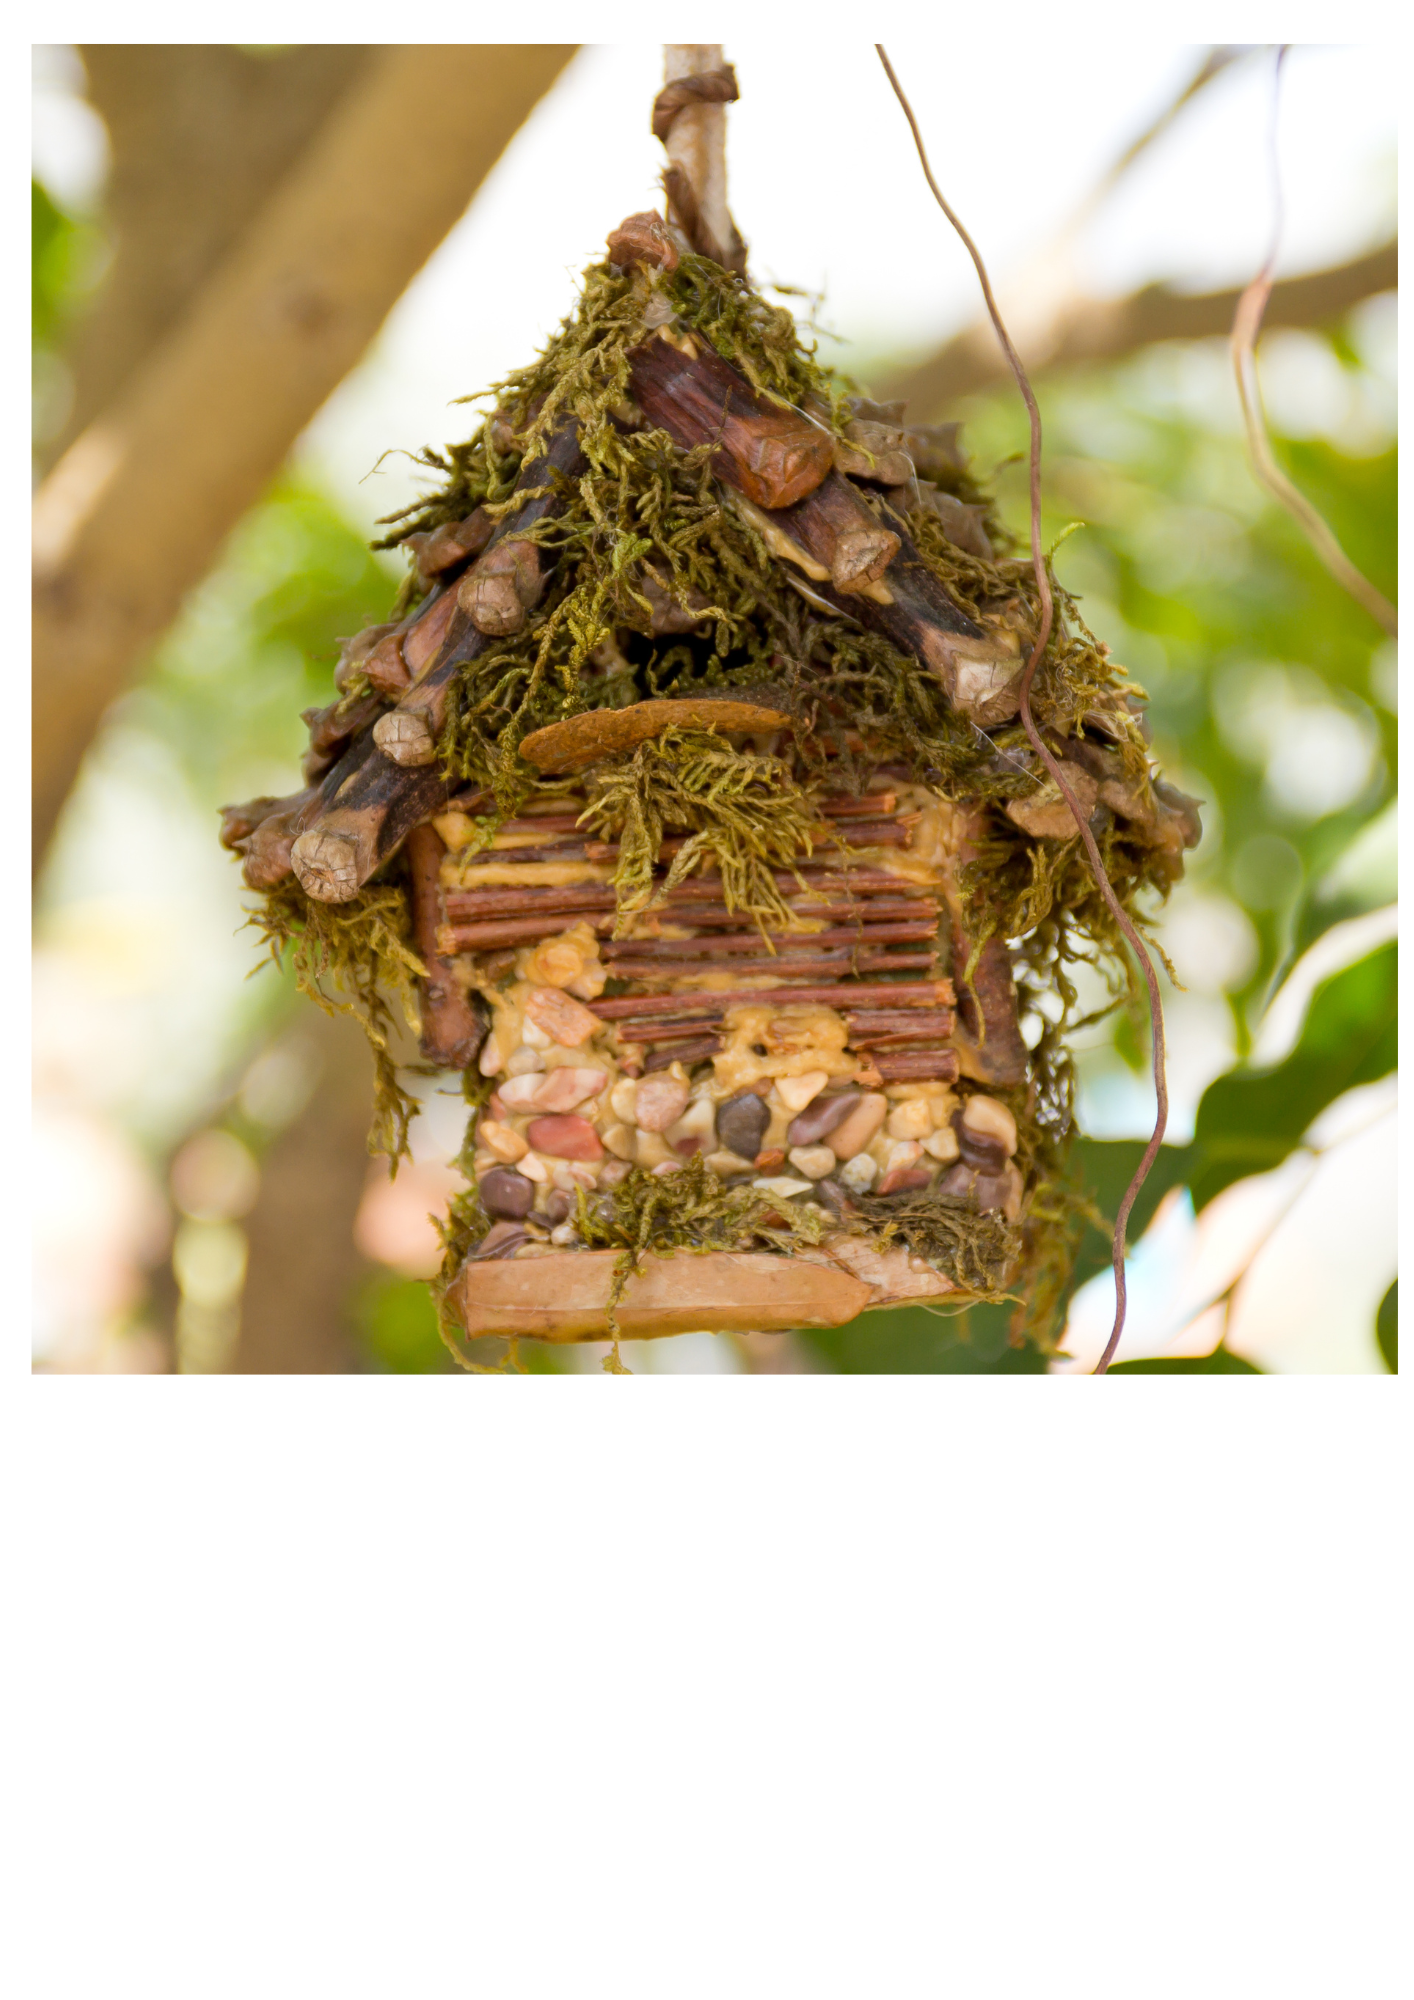 fairy house made of natural materials: bark, sticks, moss, rocks